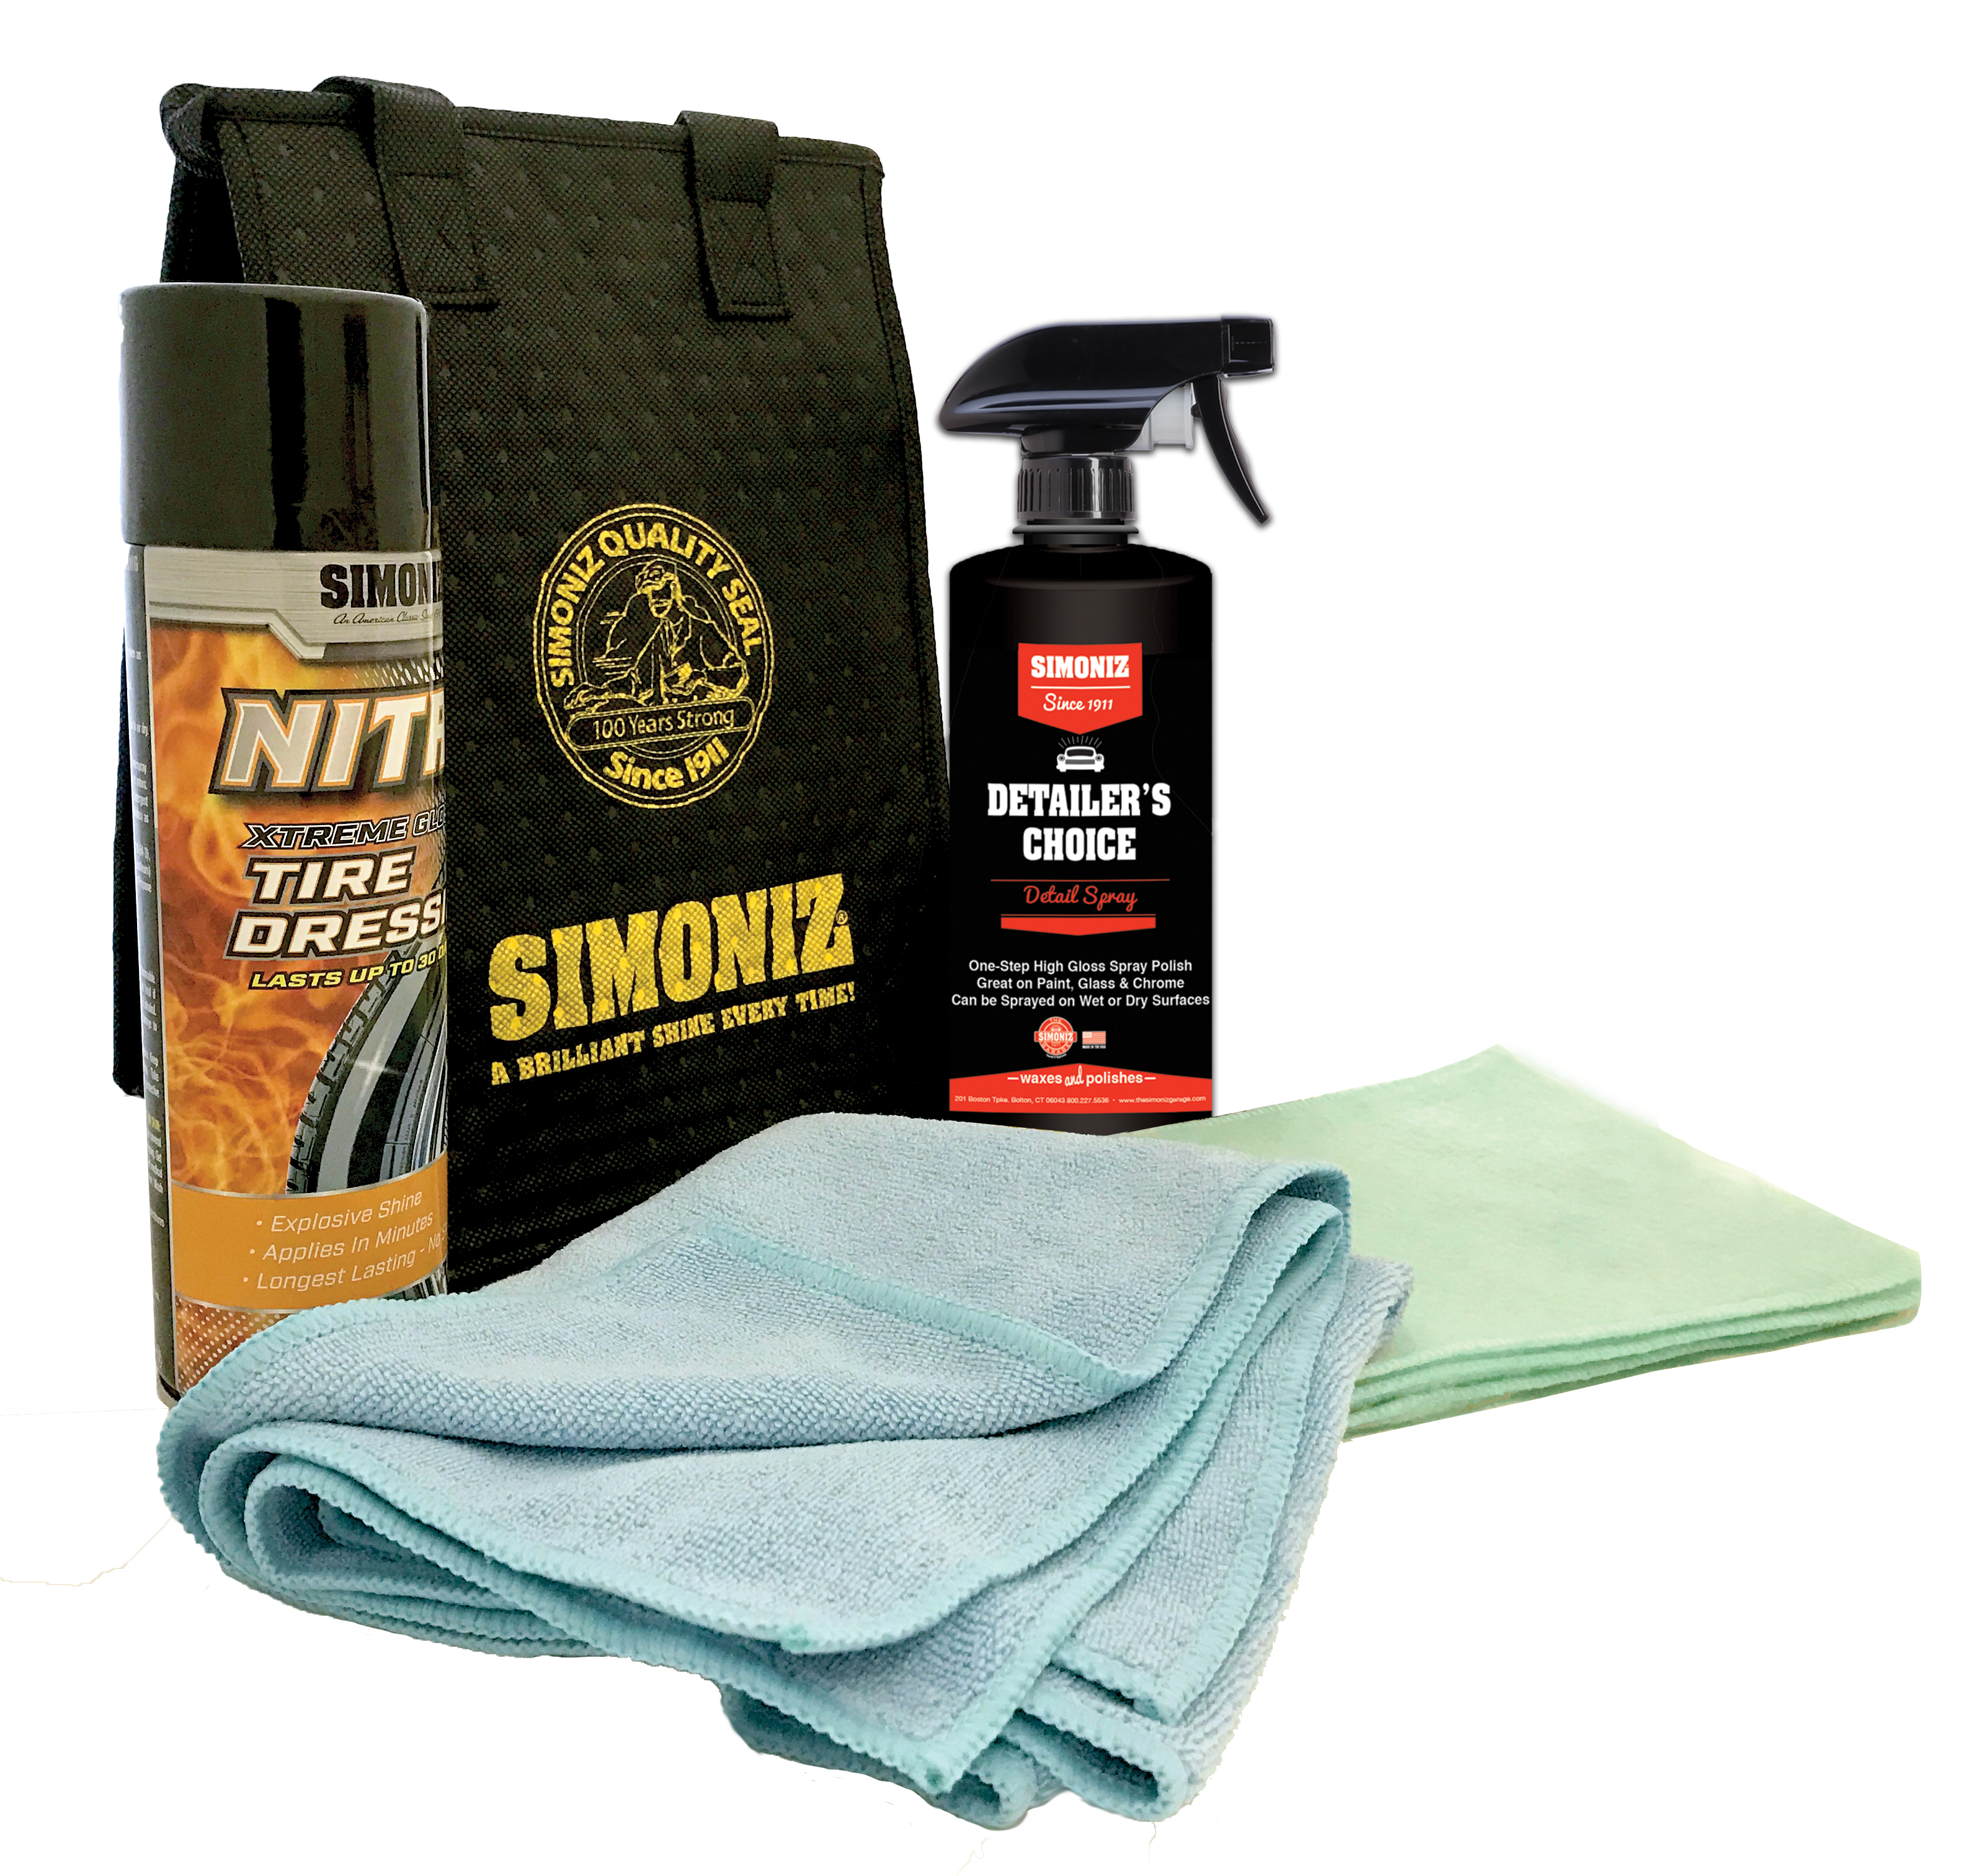 SIMONIZ 6 Pc CAR CARE KIT ~CLEAN SHINE PROTECT ~